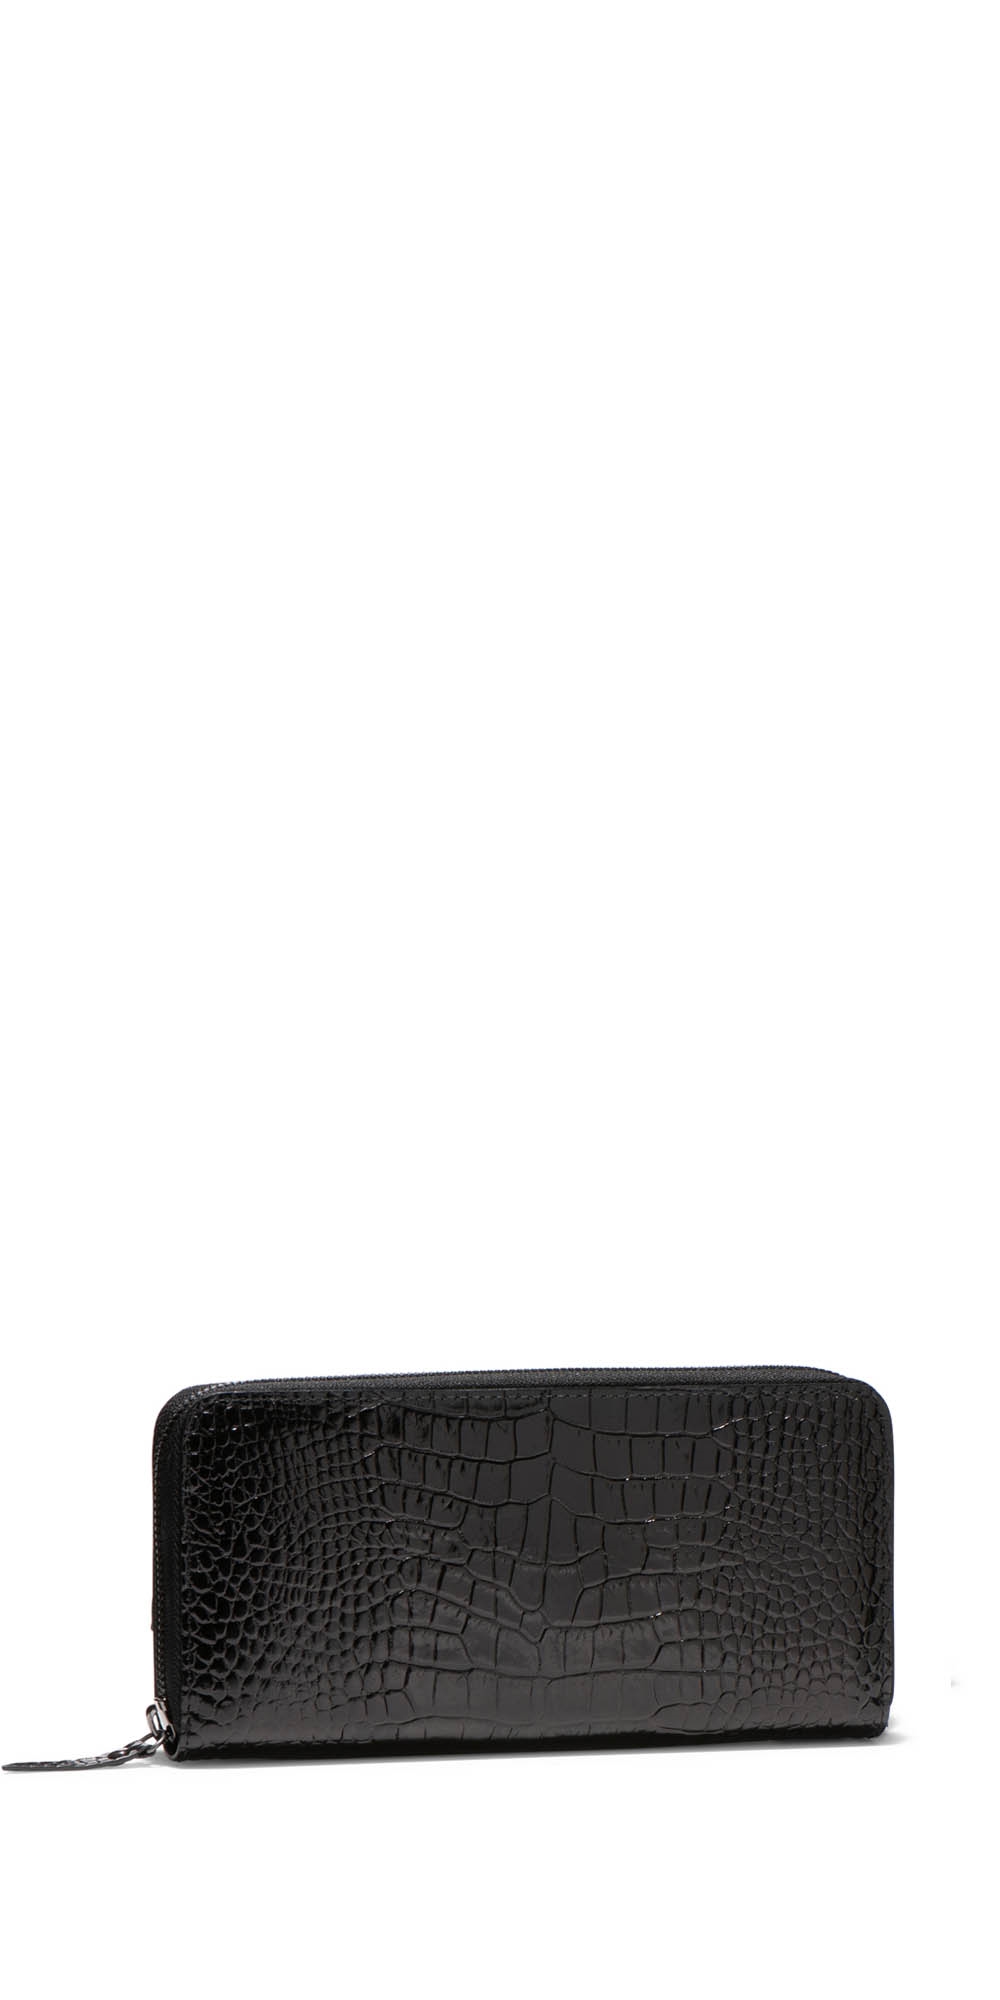 Black Croc Wallet | Buy Accessories Online - Cue